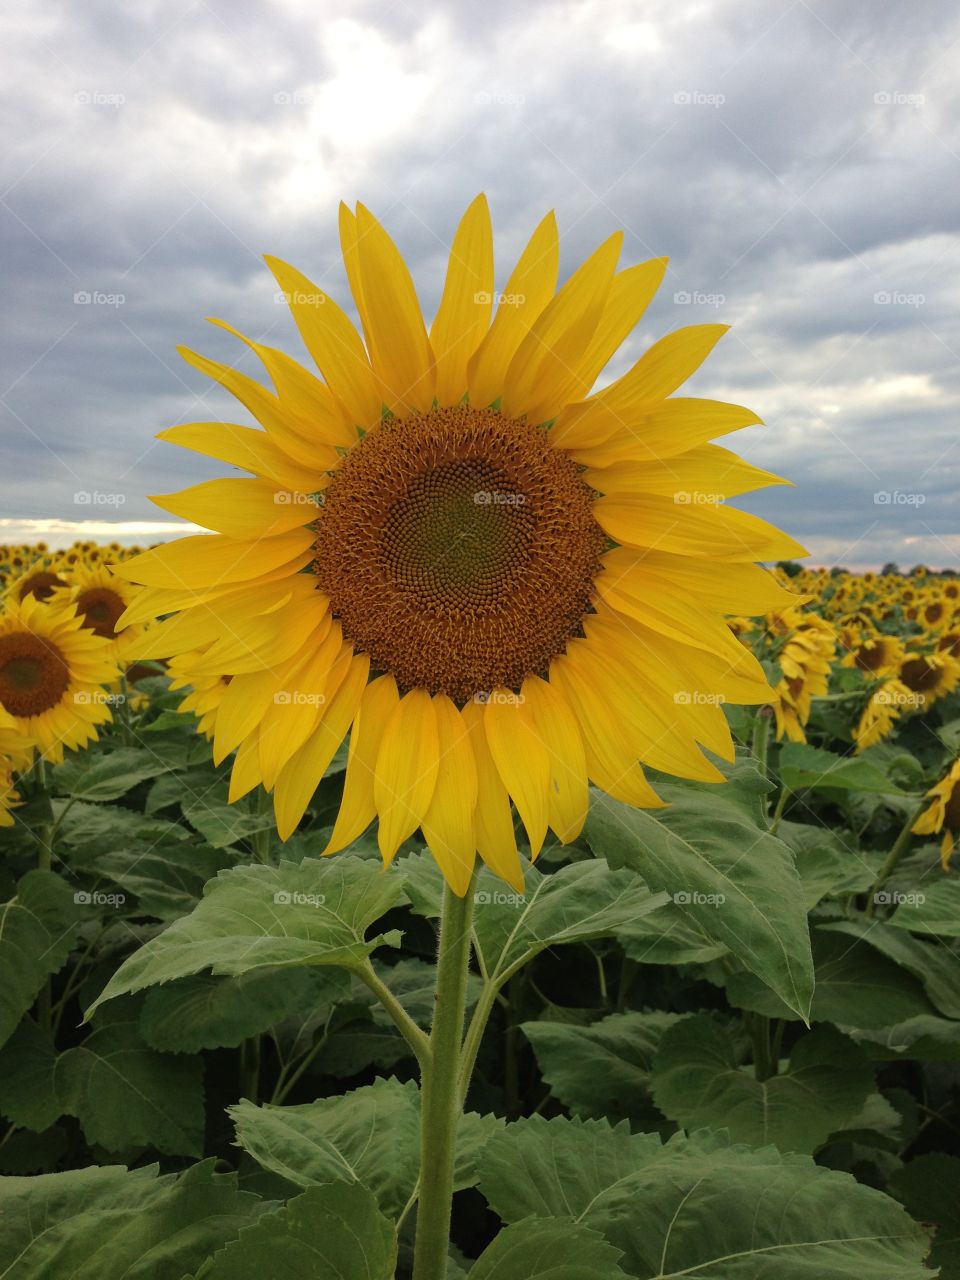 Sunflower standing up straight